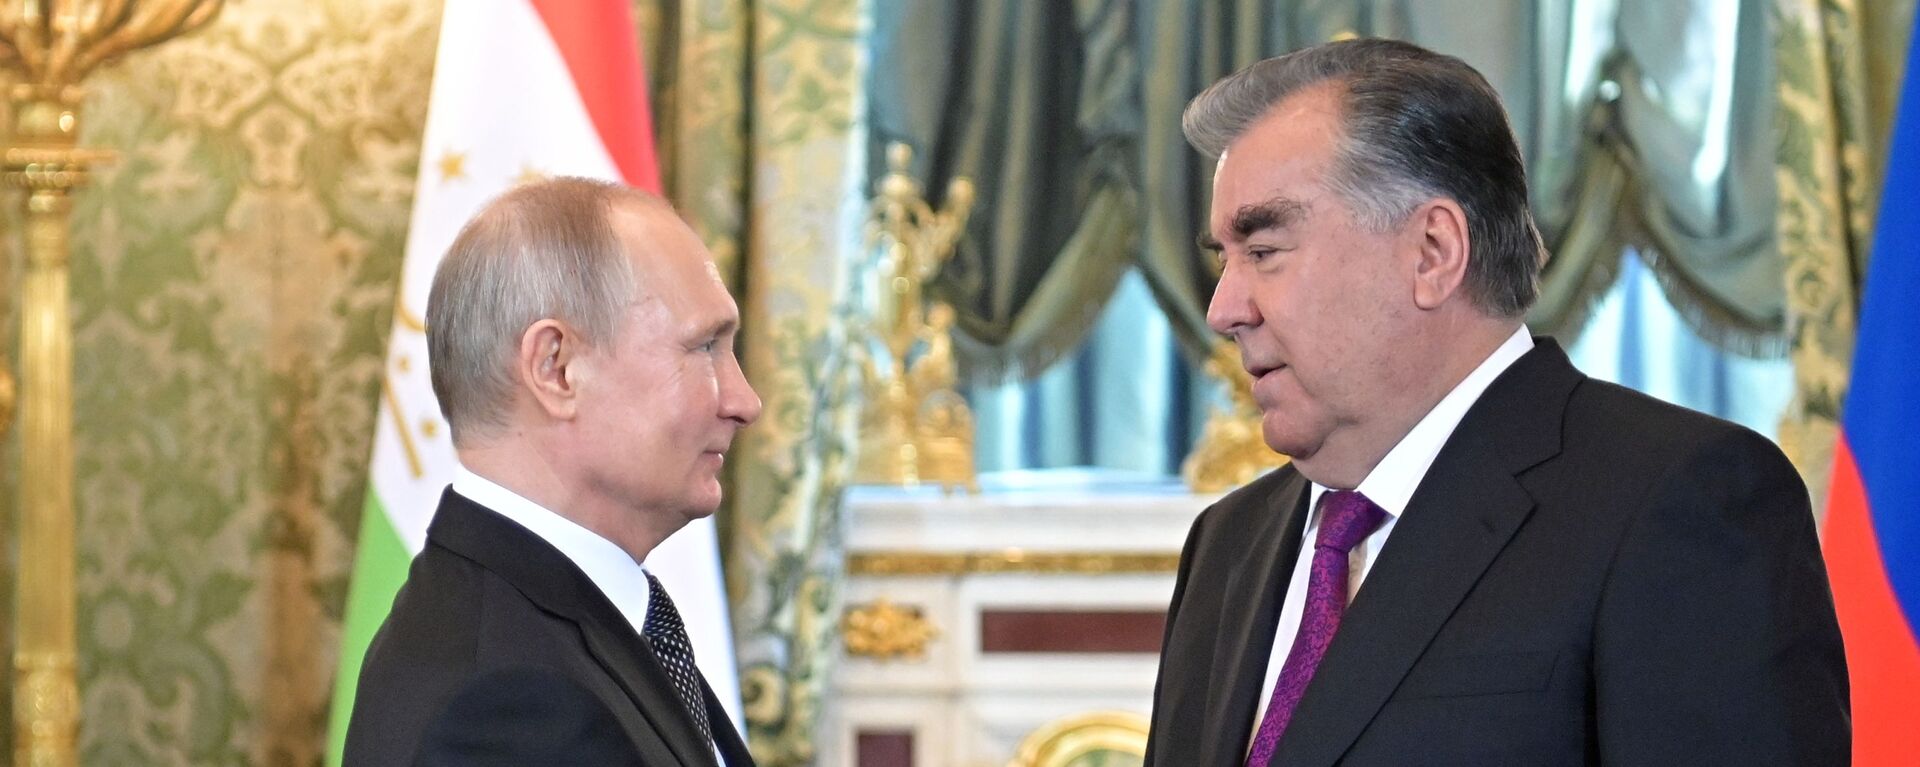 Президент РФ В. Путин встретился с президентом Таджикистана Э. Рахмон - Sputnik Таджикистан, 1920, 05.10.2021